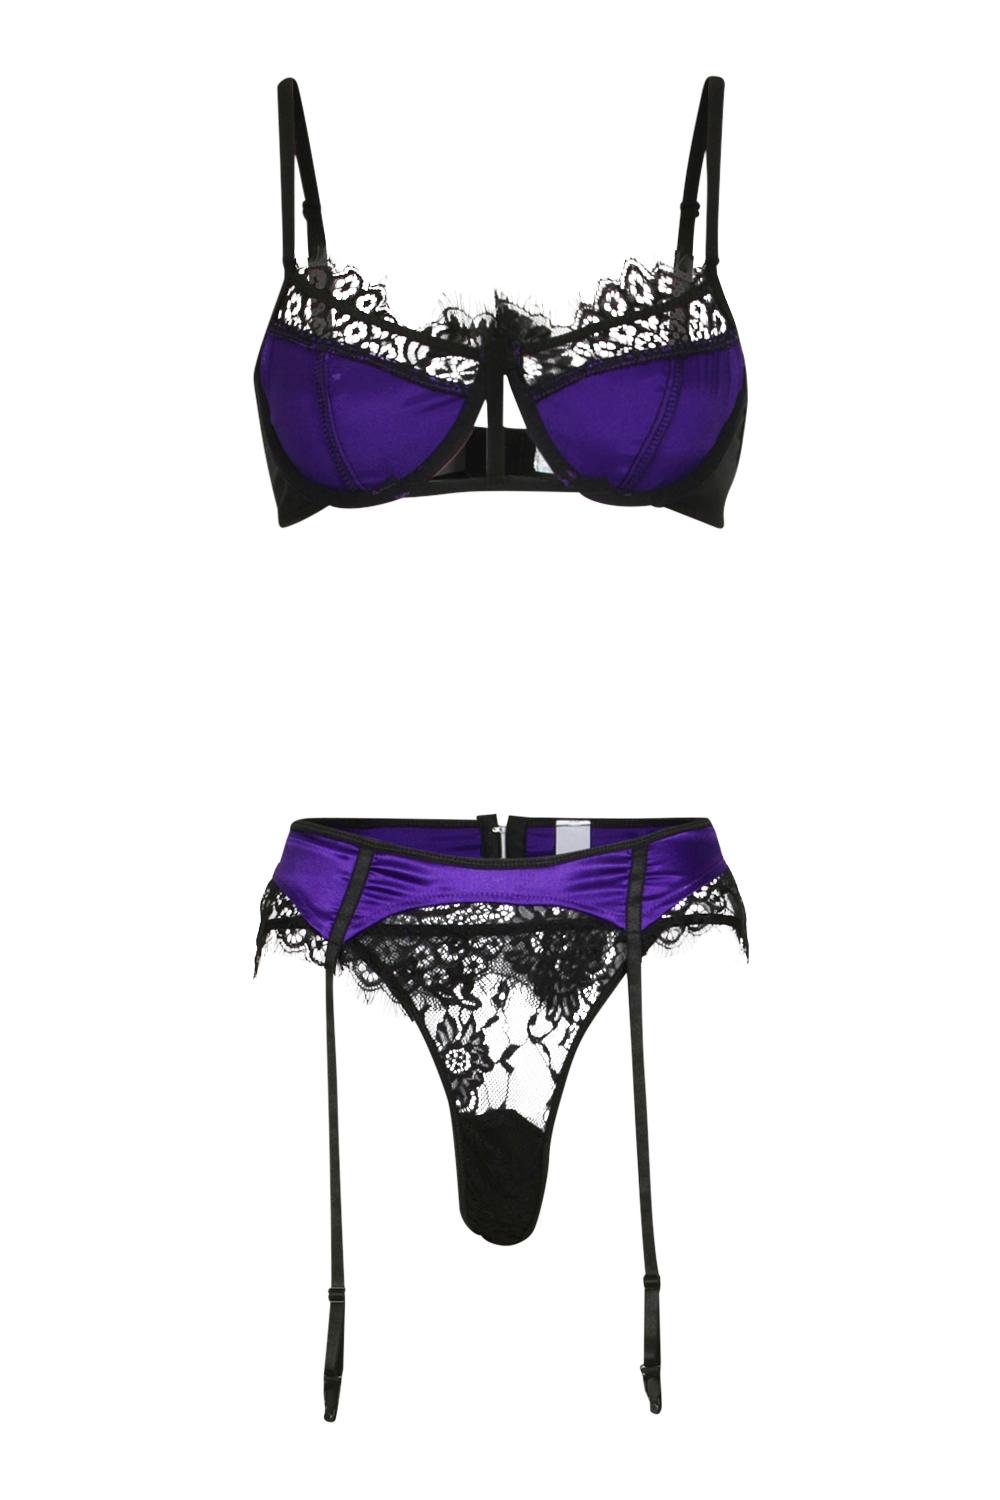 https://media.boohoo.com/i/boohoo/lzz00294_purple_xl_4/female-purple-satin-lace-trim-lingerie-set